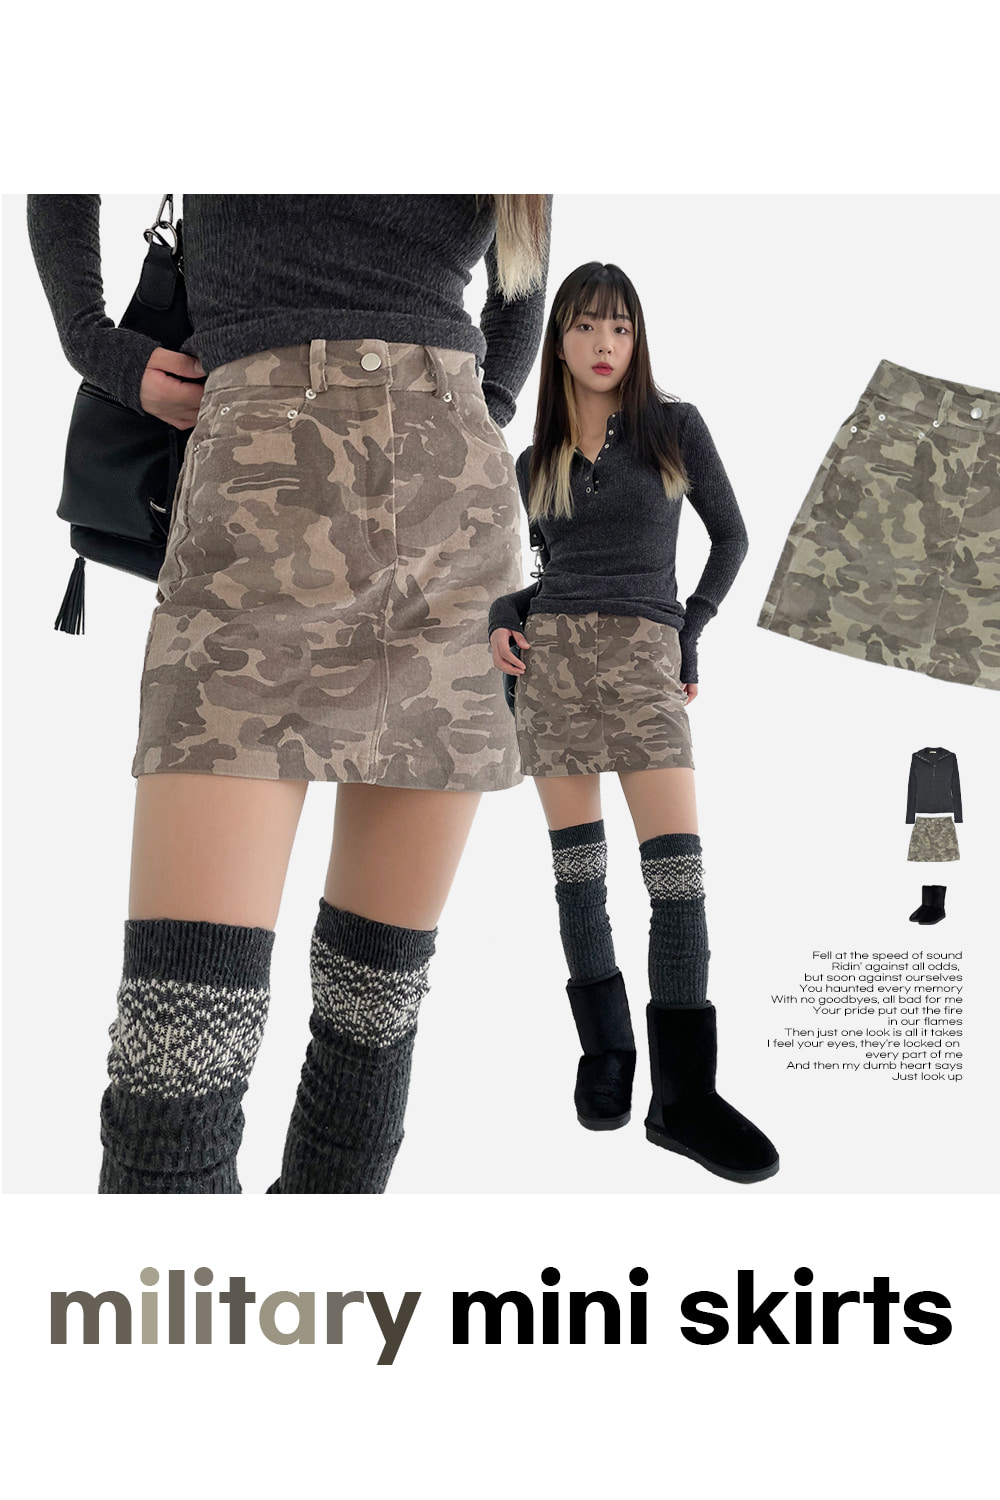 military mini skirts